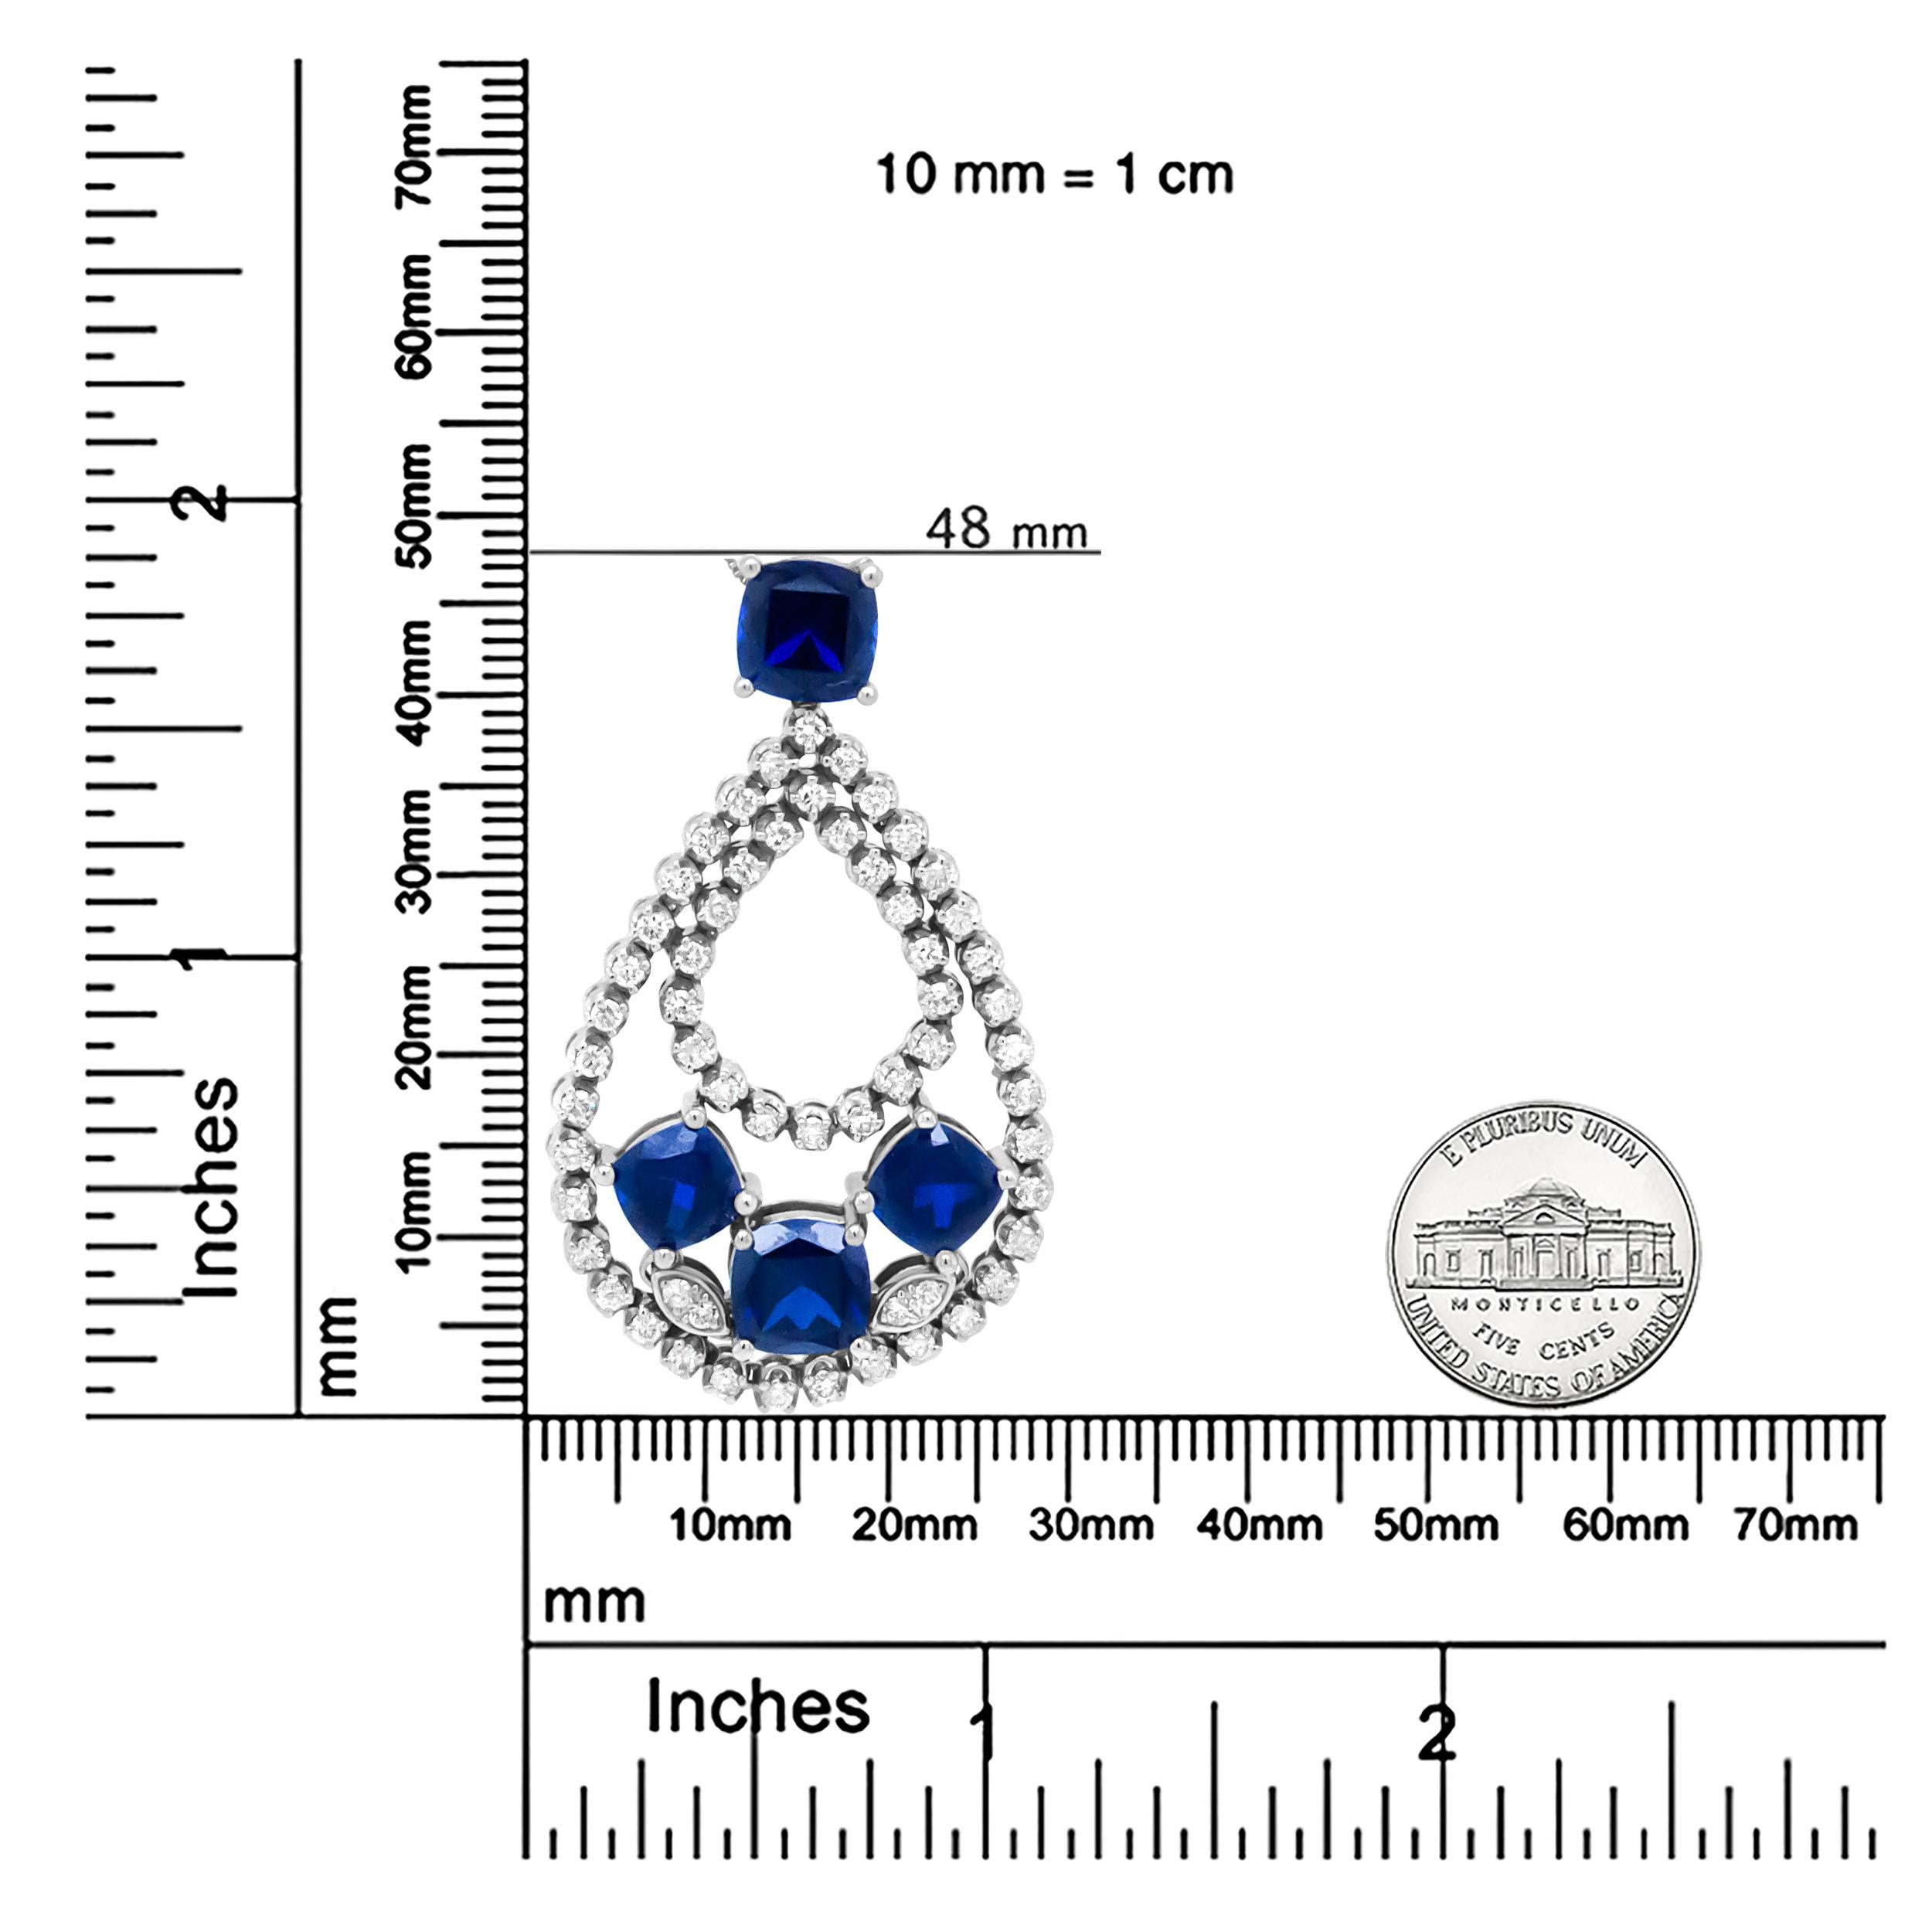 Women's 18K White Gold 1.0 Carat Diamond and Blue Sapphire Openwork Pendant Necklace